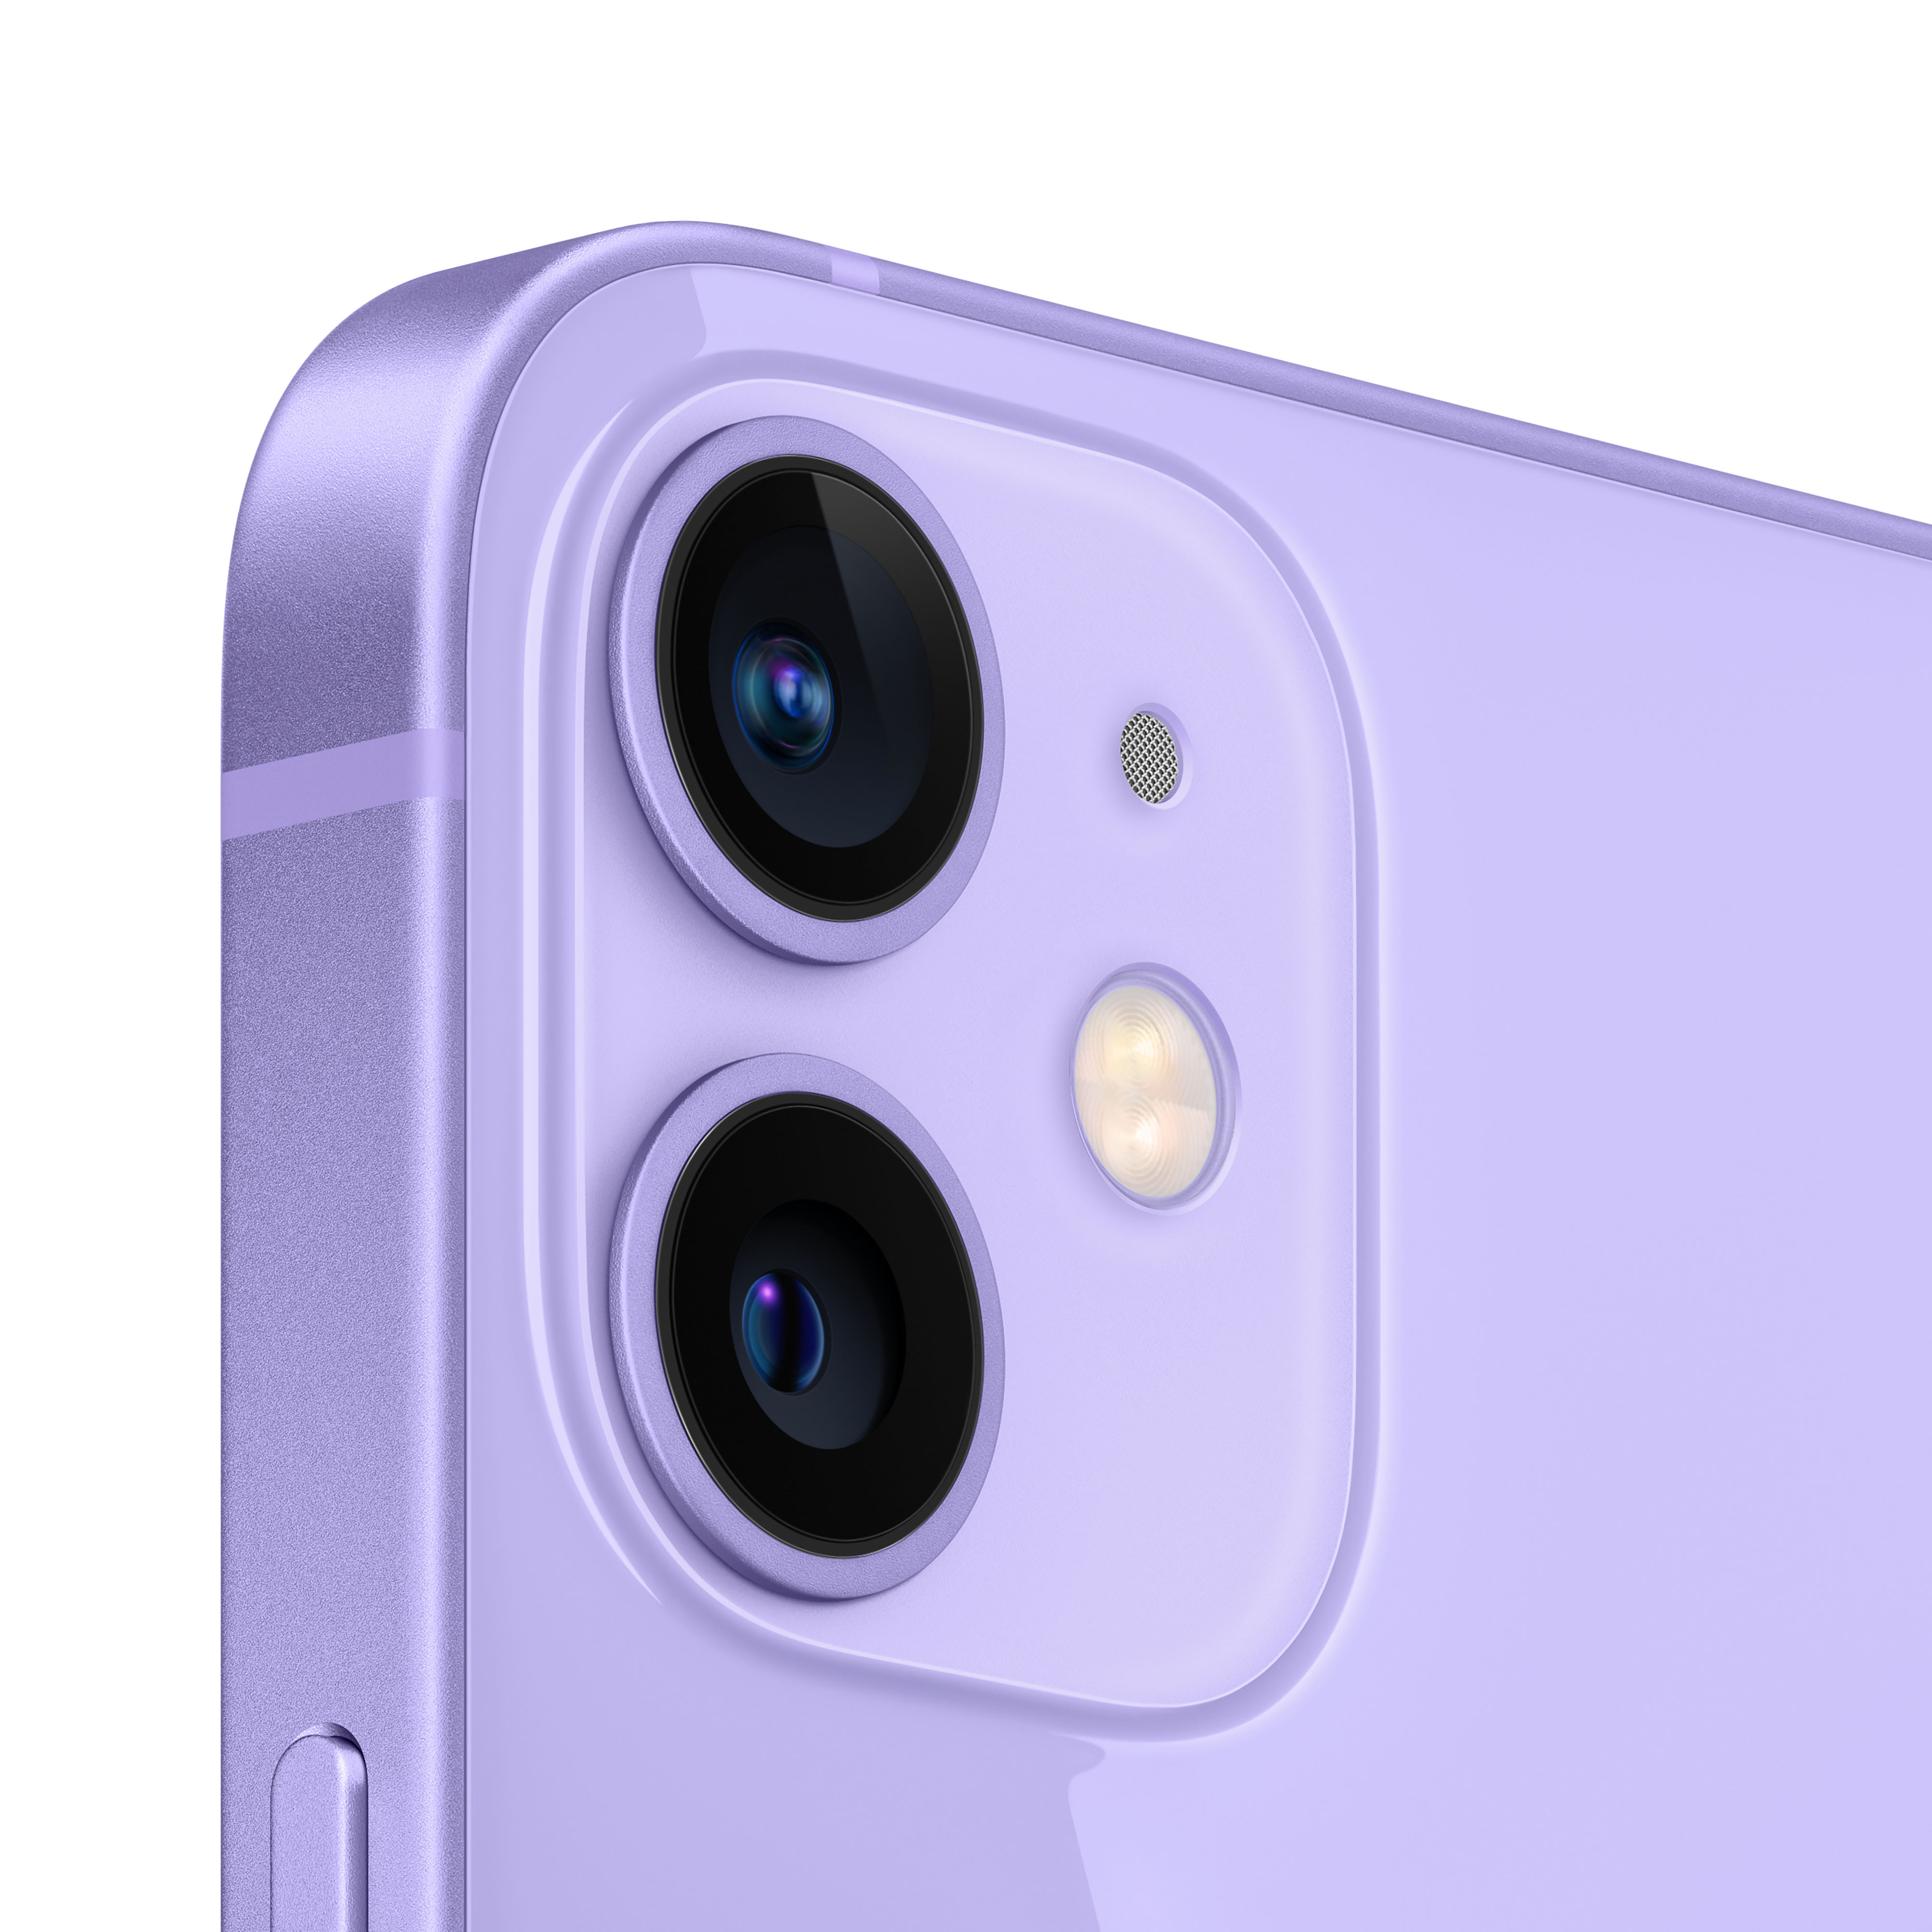 Thumbnail image of Apple iPhone 12 mini 64GB Purple